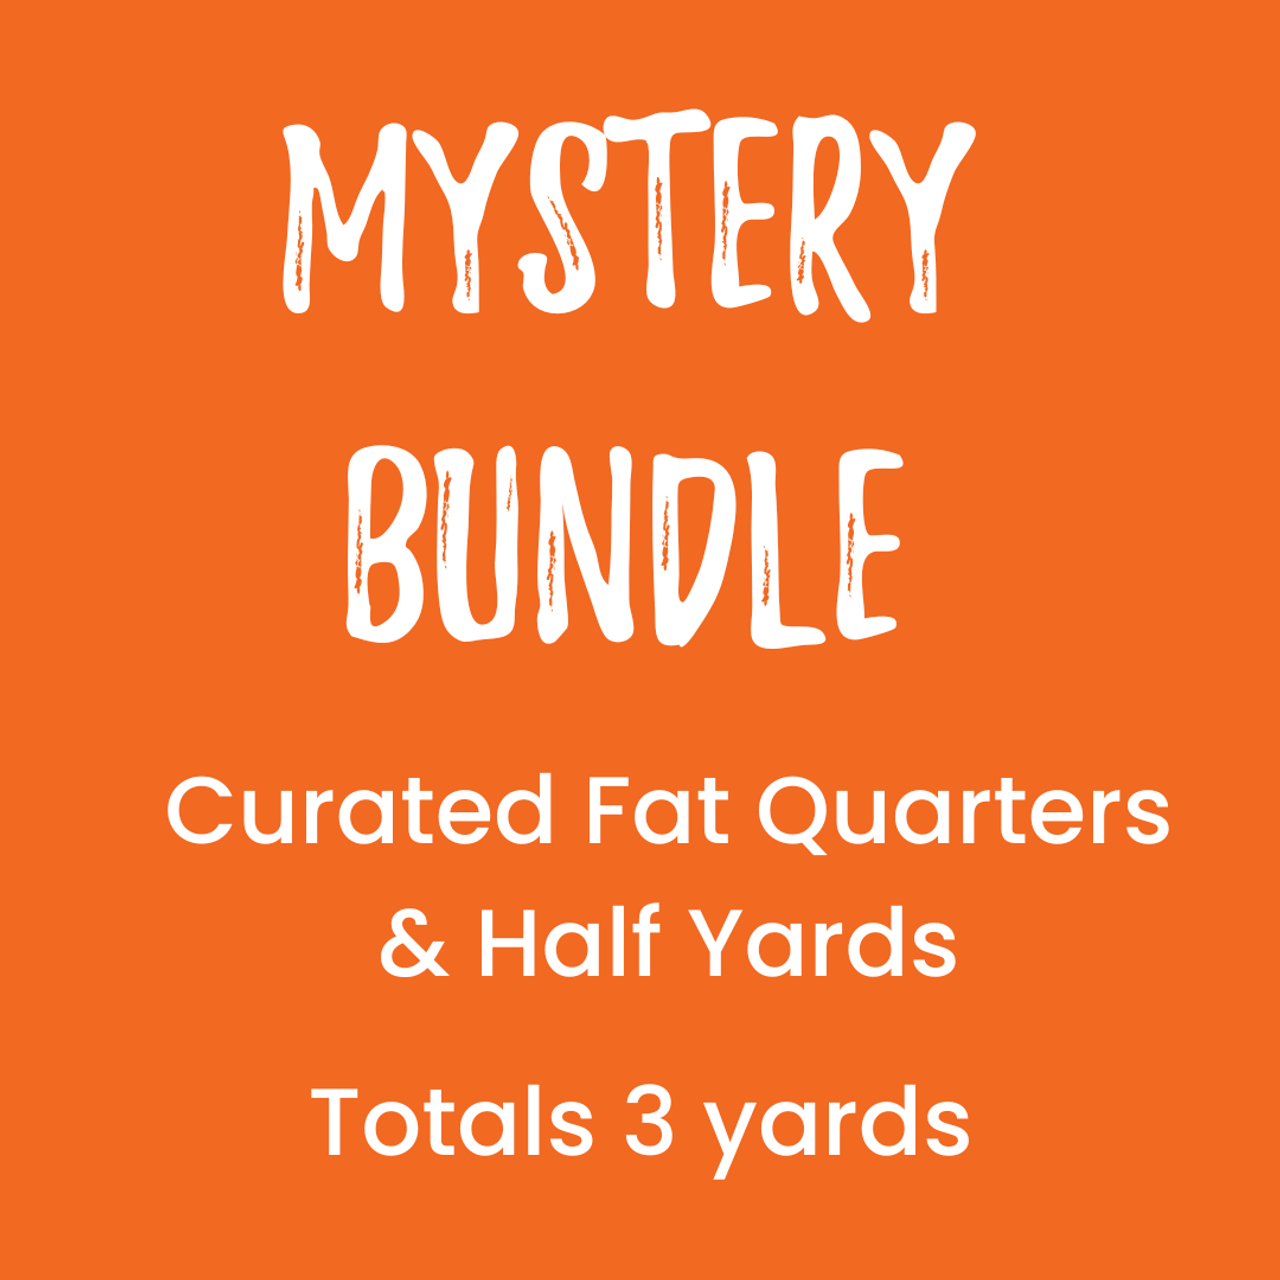 Mystery Fat Quarter Bundle